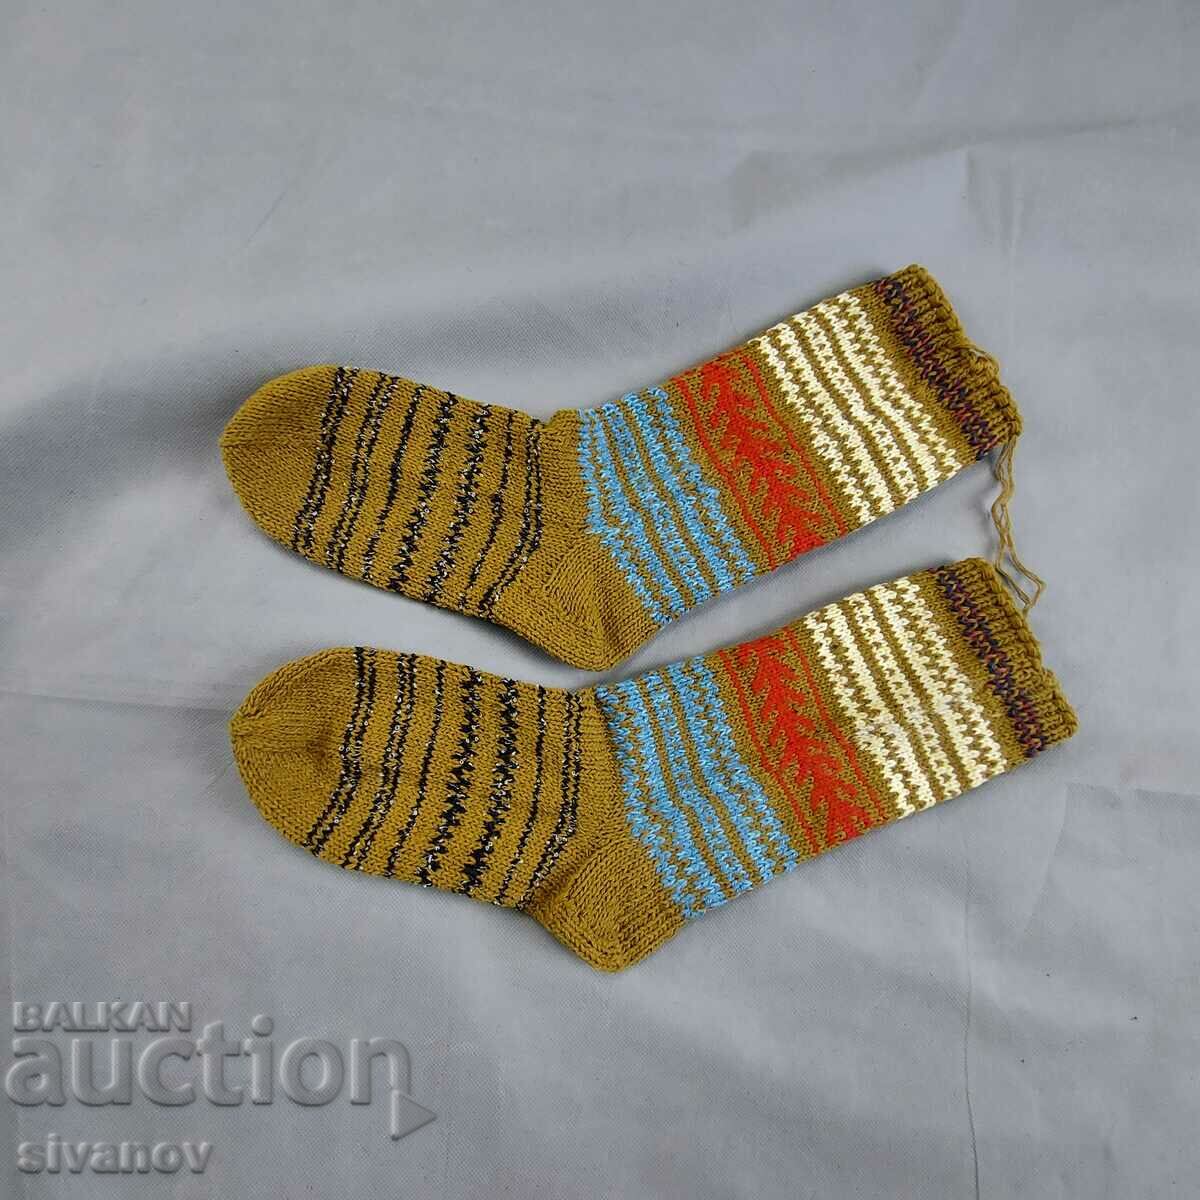 Wool socks for ethnic folklore costume #2357